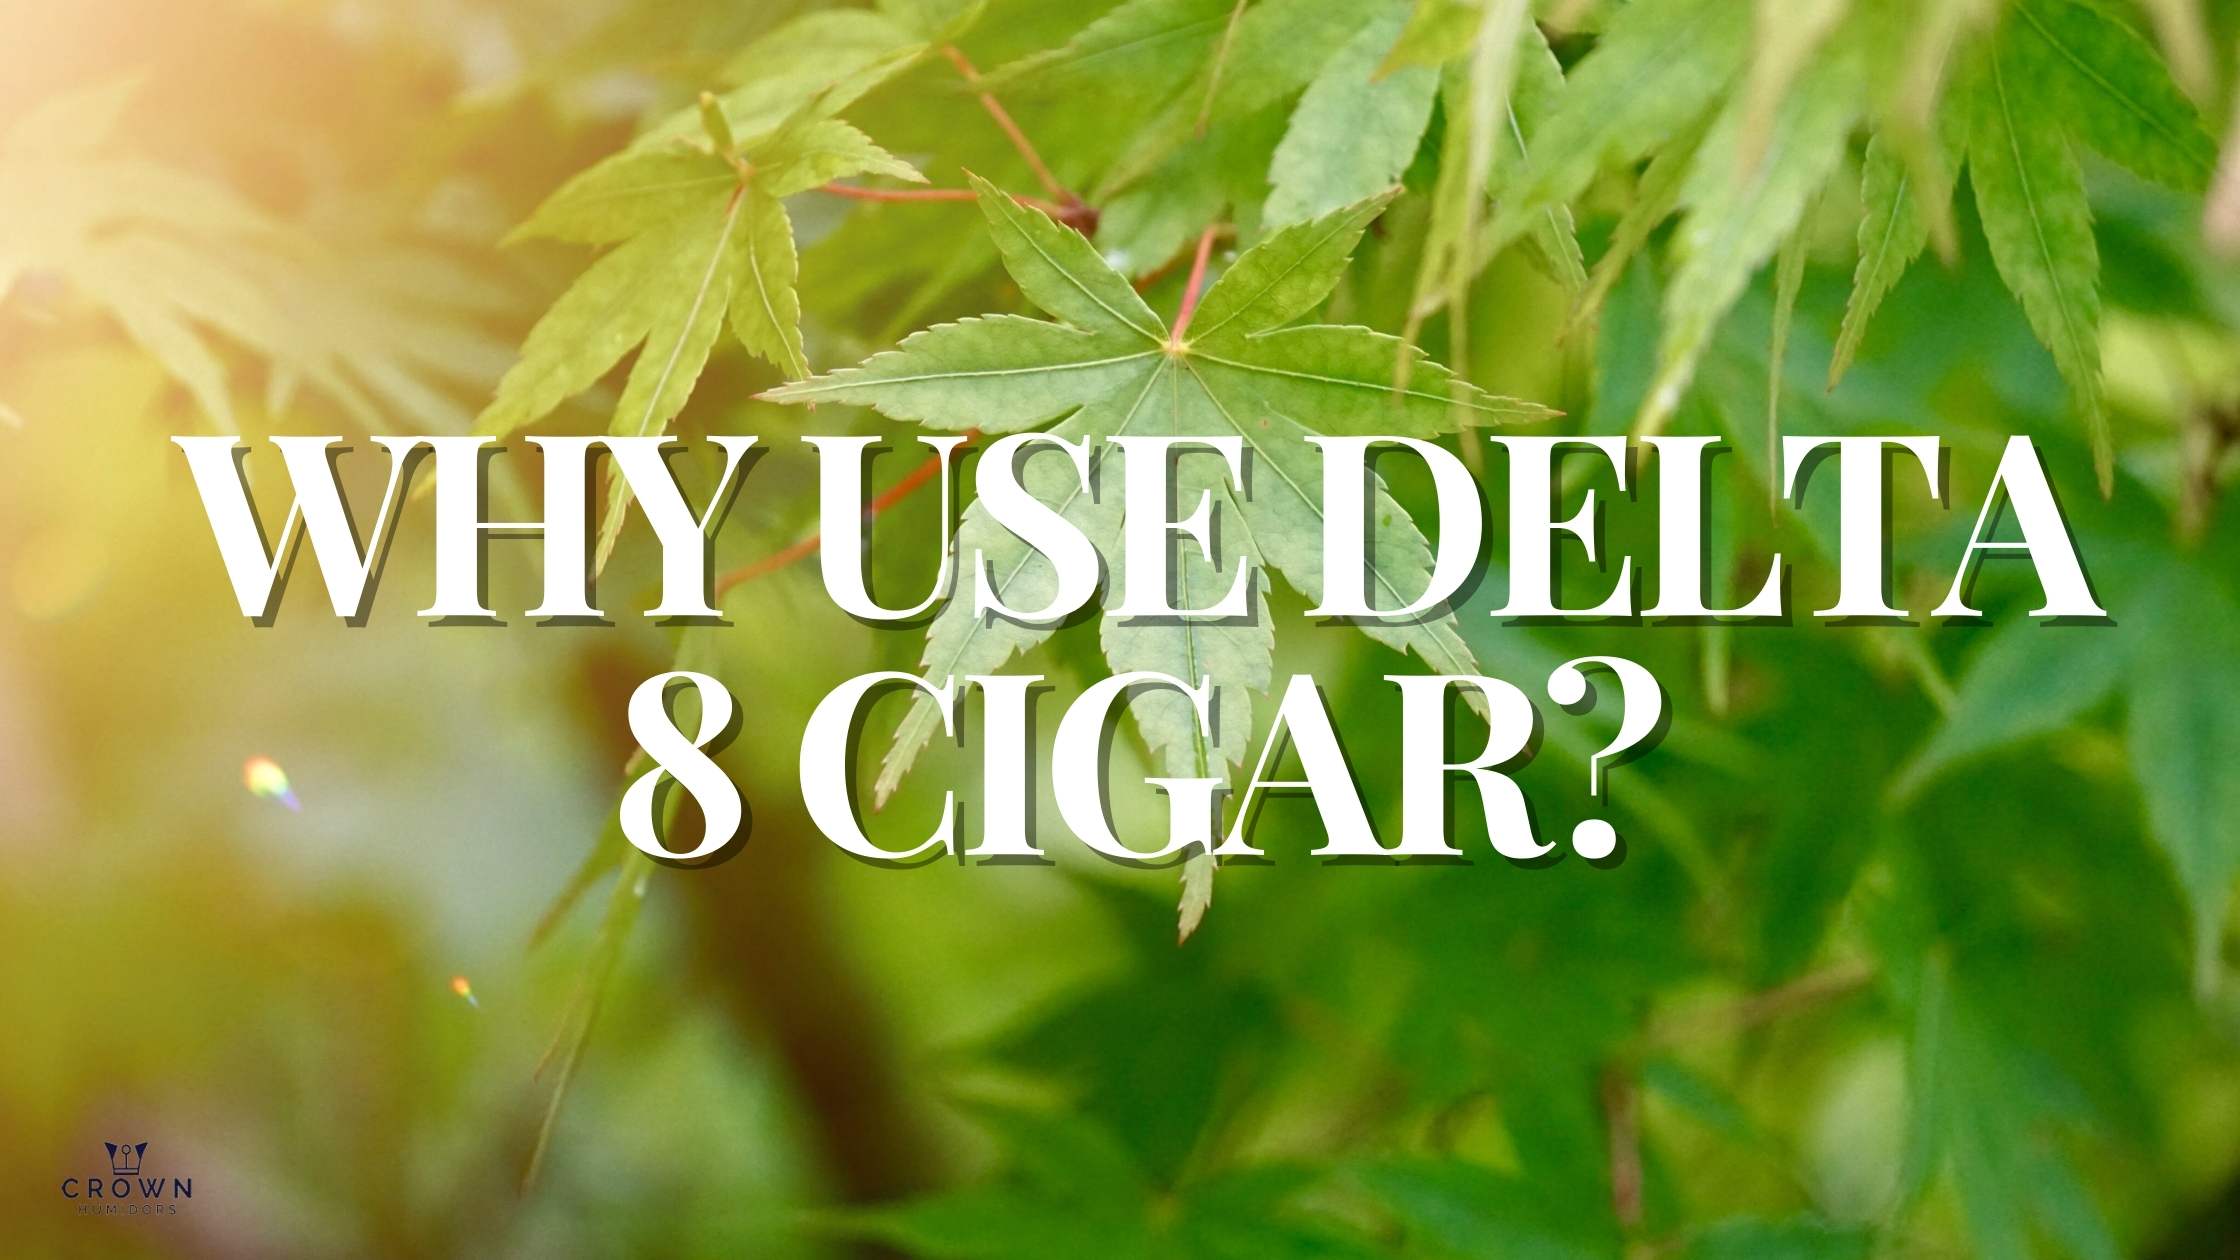 Why Use Delta 8 Cigar?